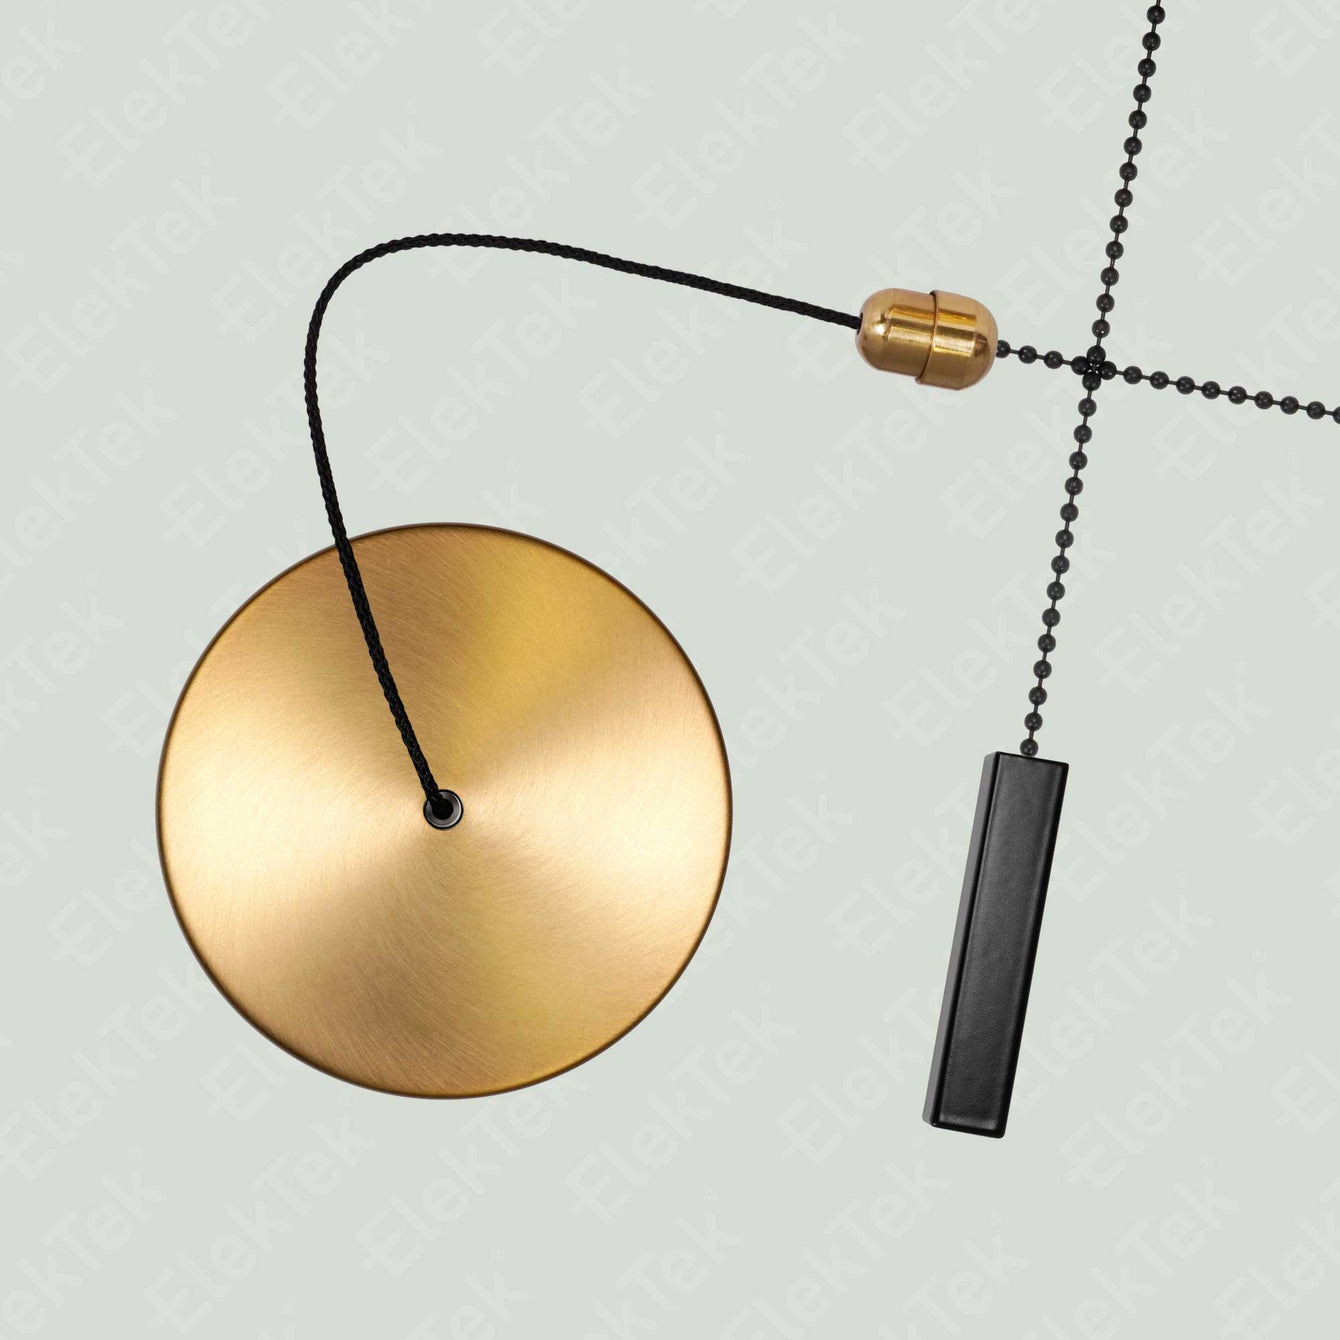 ElekTek Premium Brushed Brass Bathroom Light Pull Cord Switch Kit with Pull Chain Handle Grey Blue Disc / Brass